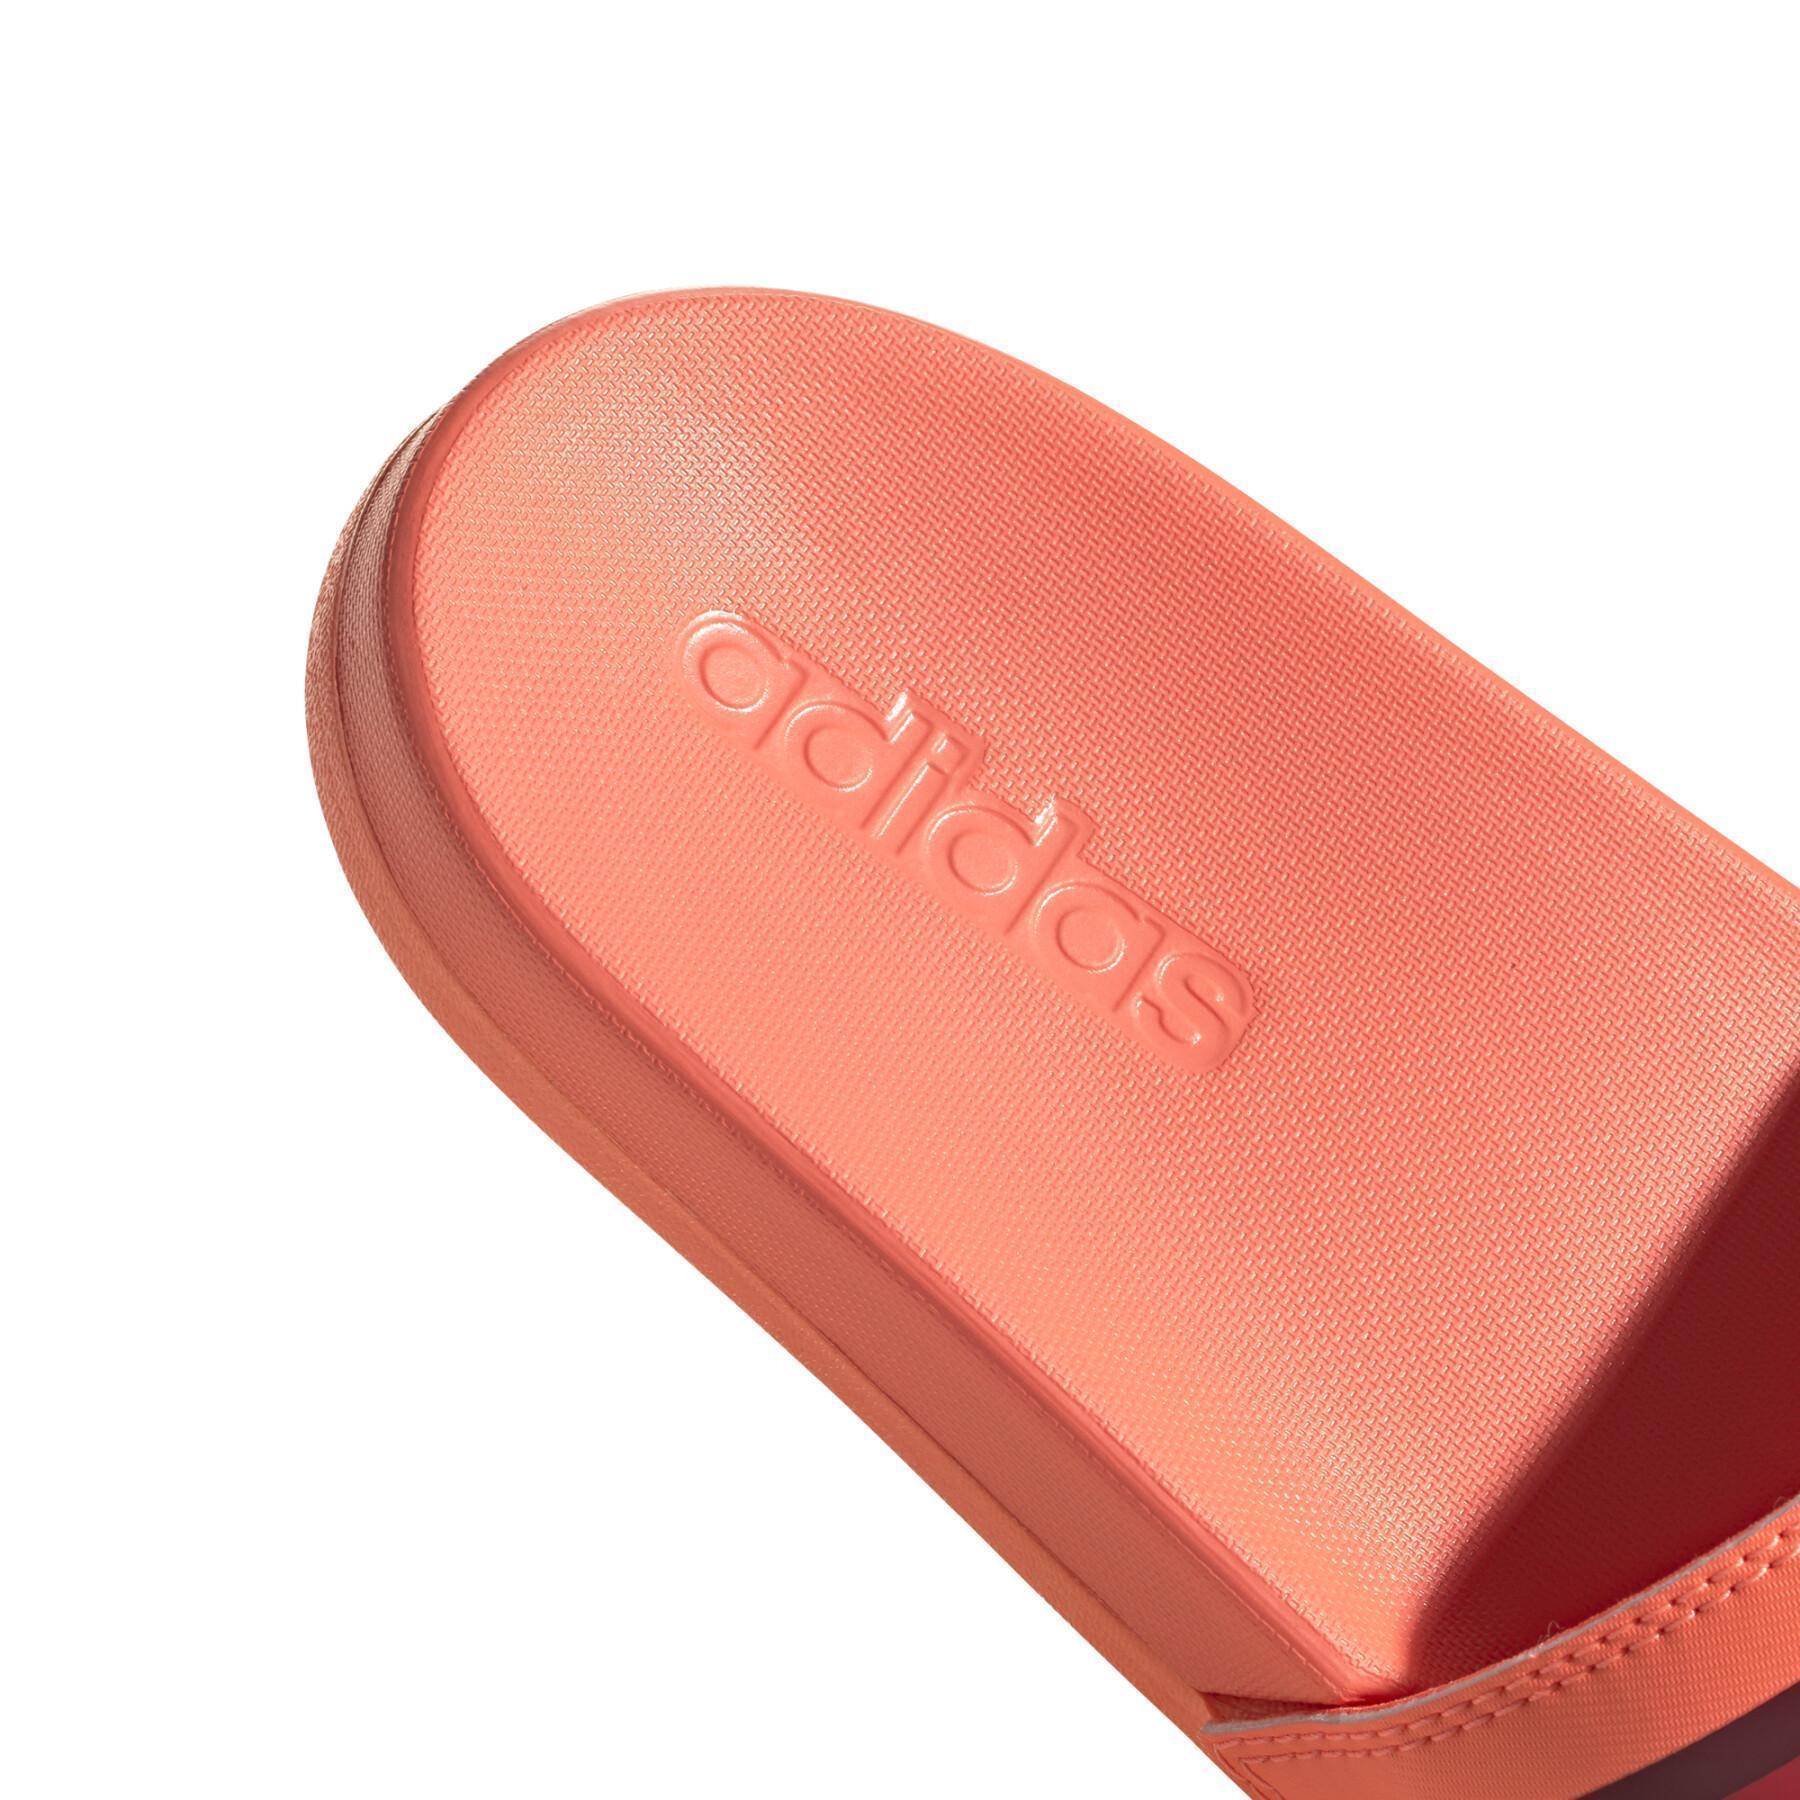 Women's flip-flops adidas FAR Rio Adilette Comfort